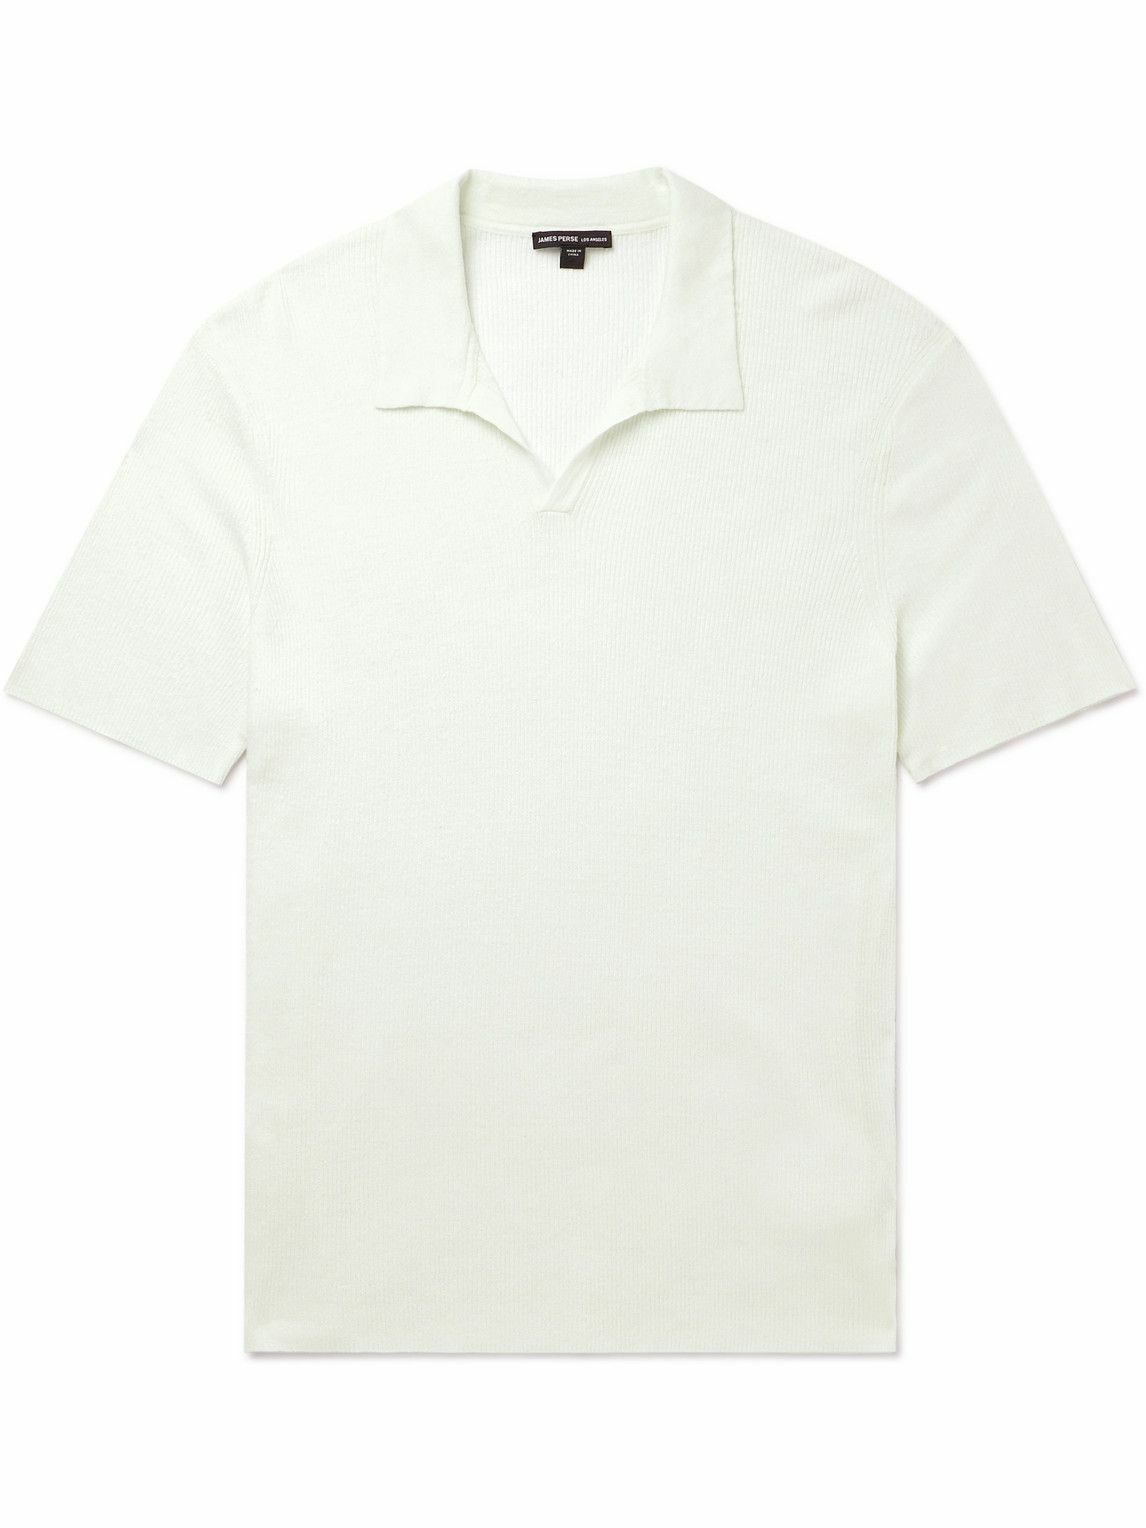 James Perse - Ribbed Linen-Blend Polo Shirt - Green James Perse